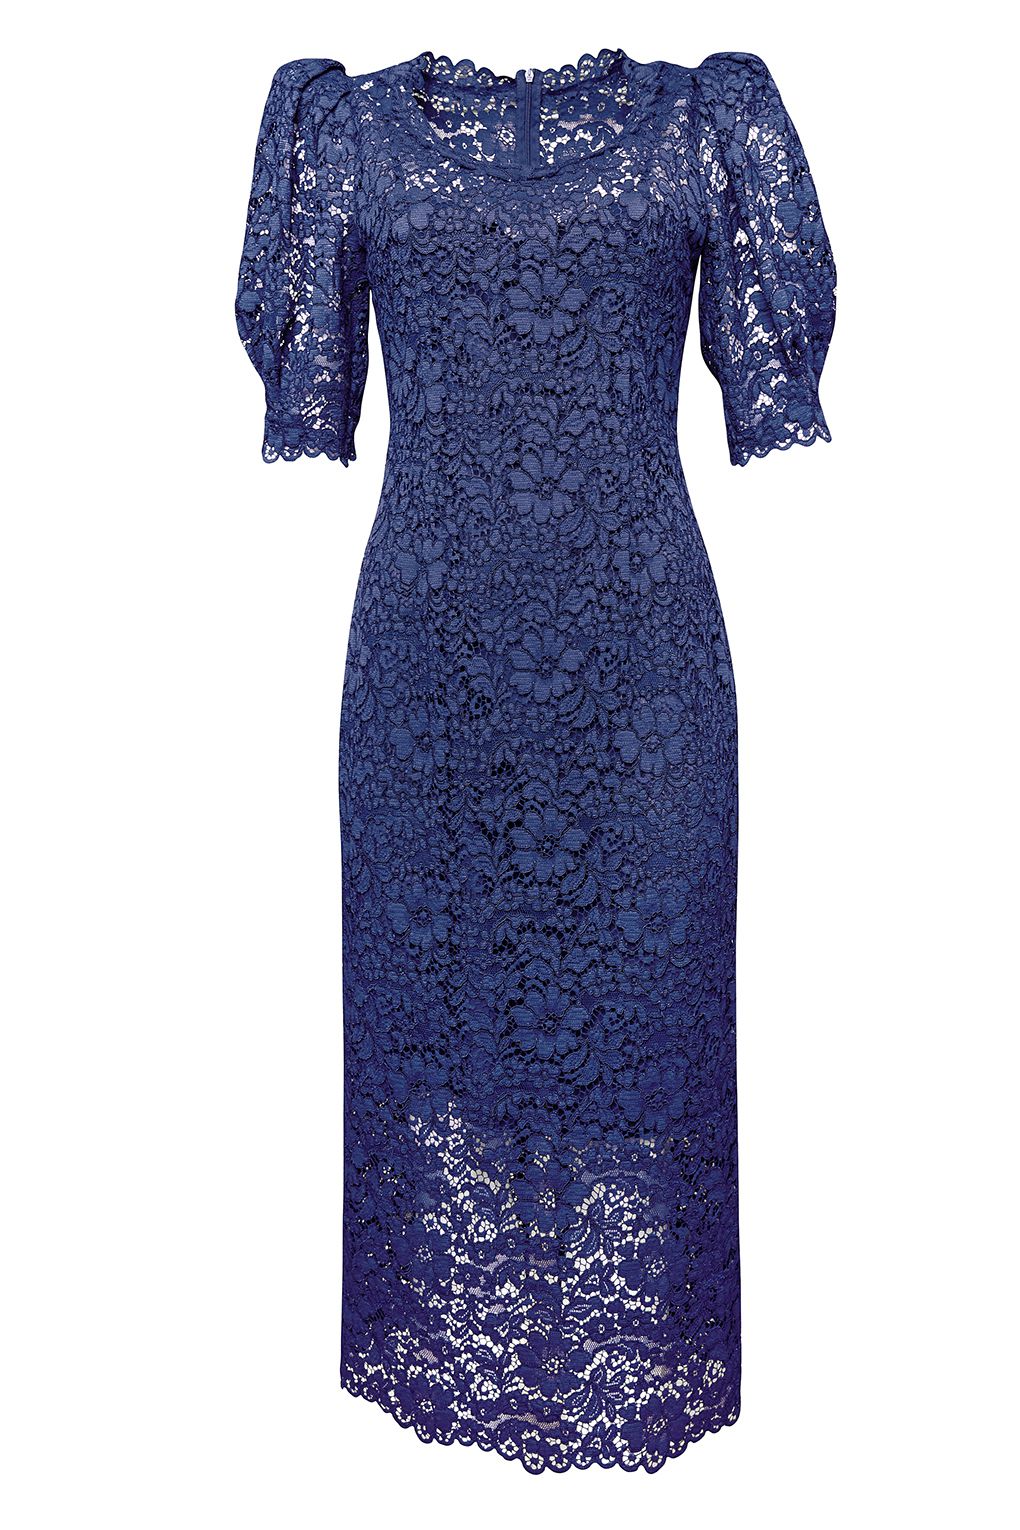 Платье женское PAOLA RAY PR121-3025 синее M